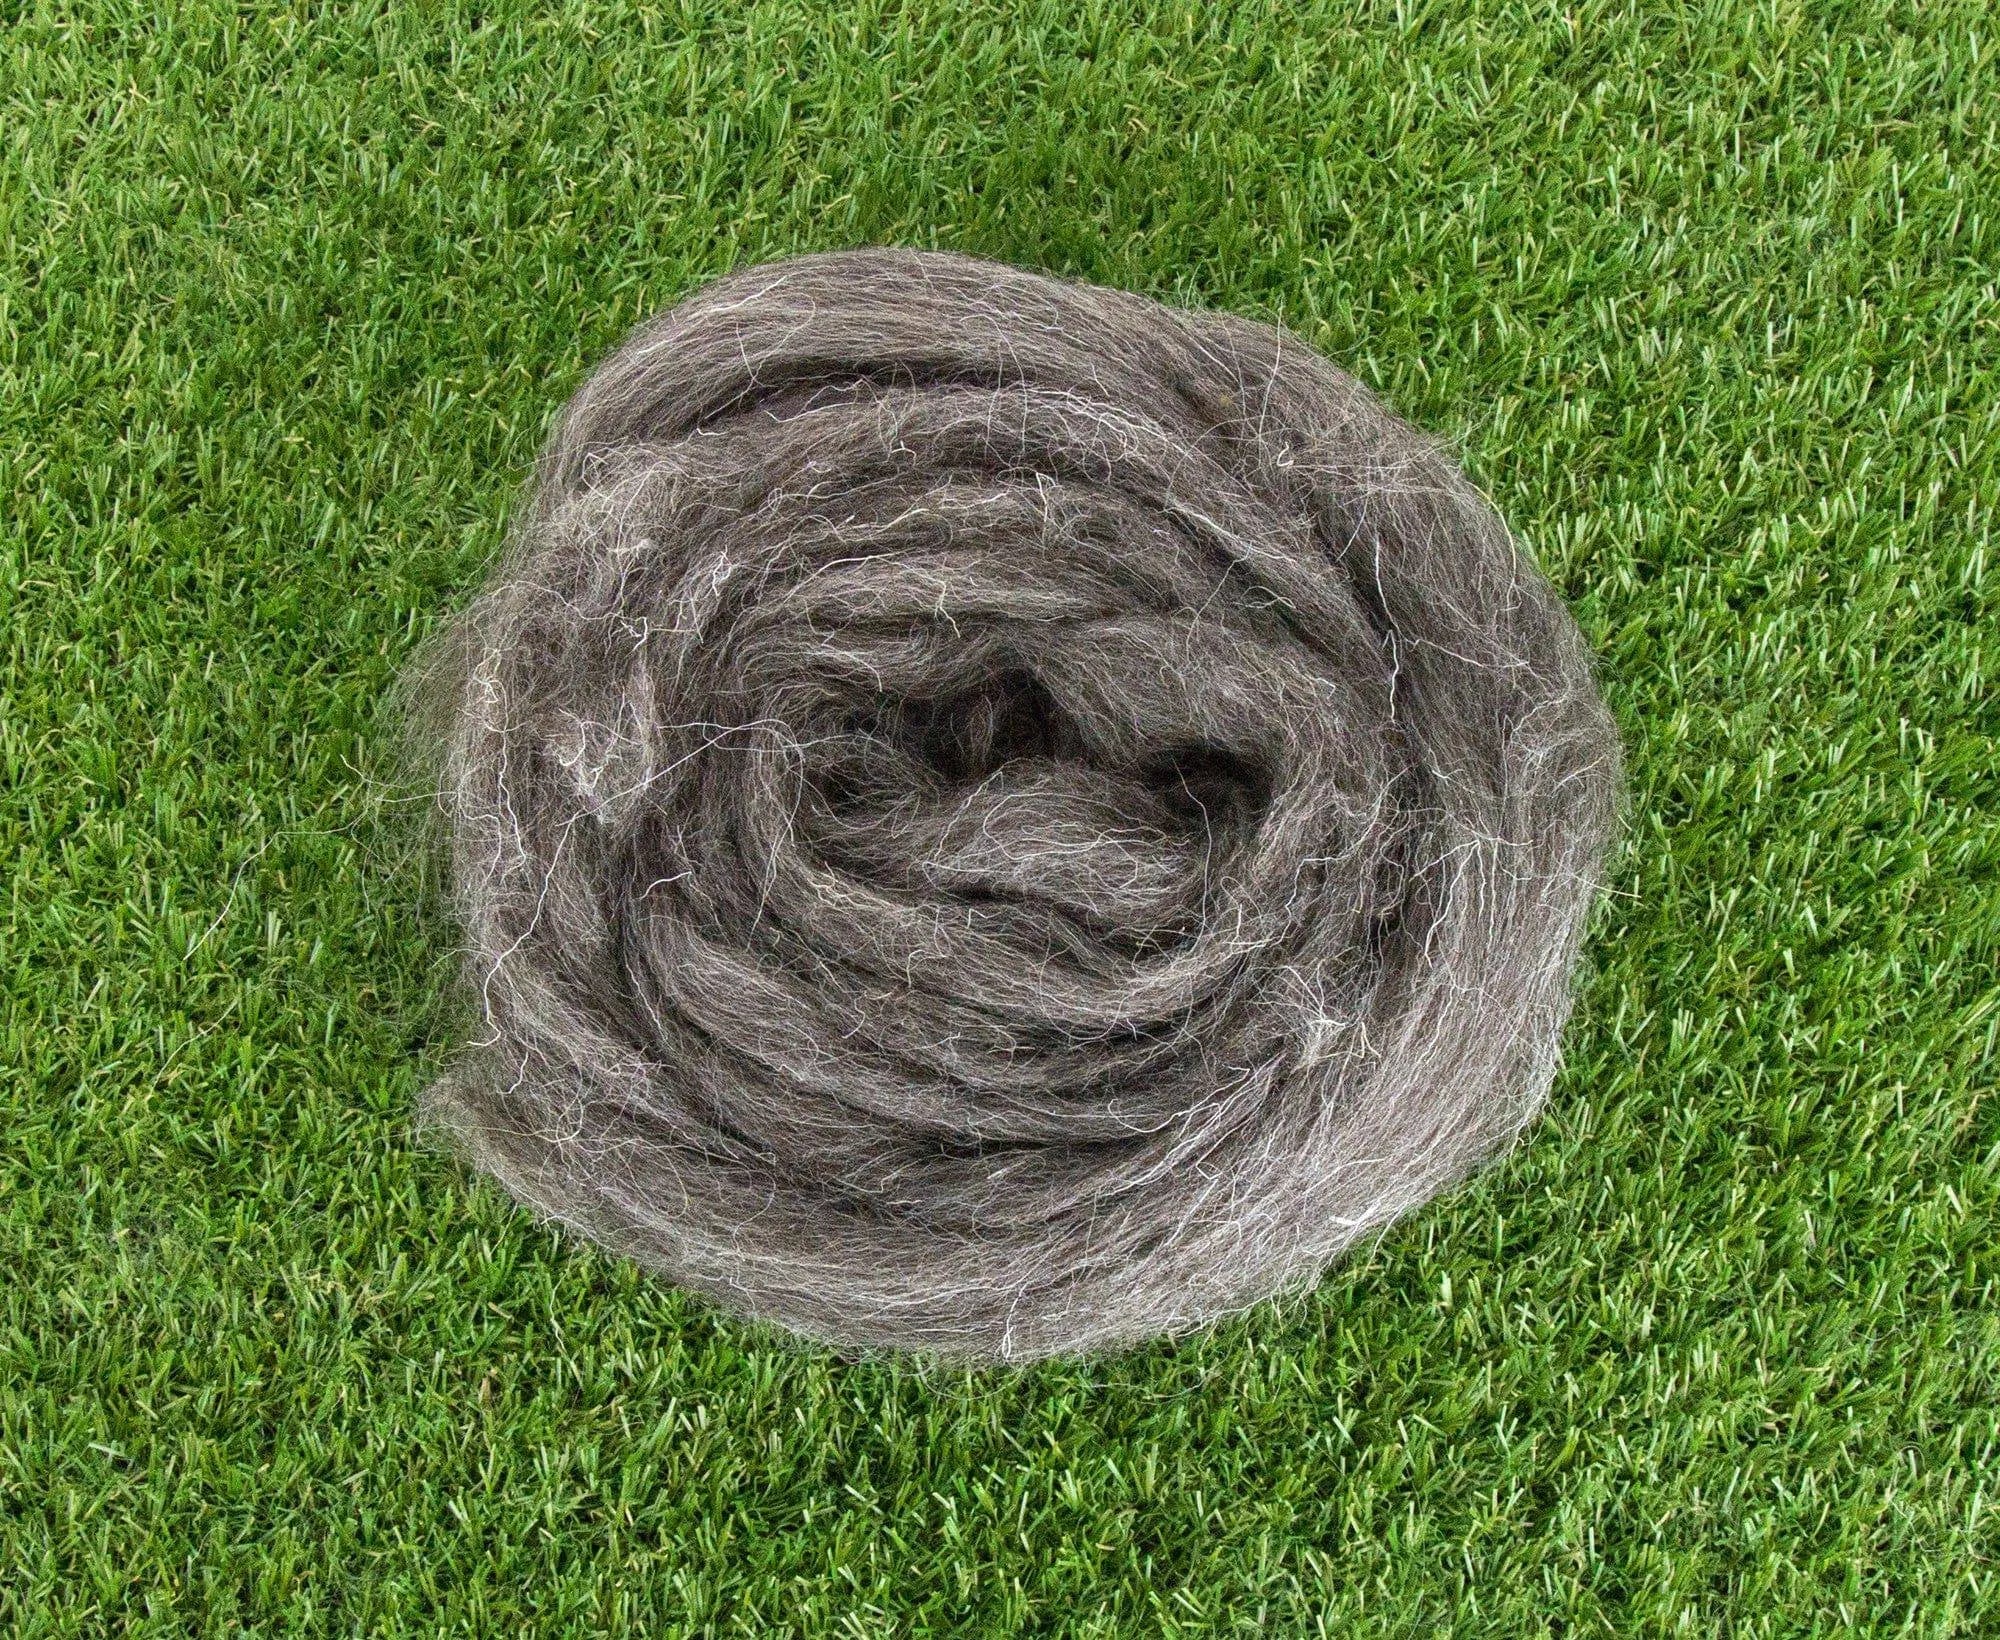 Dark Grey Herdwick Top - World of Wool